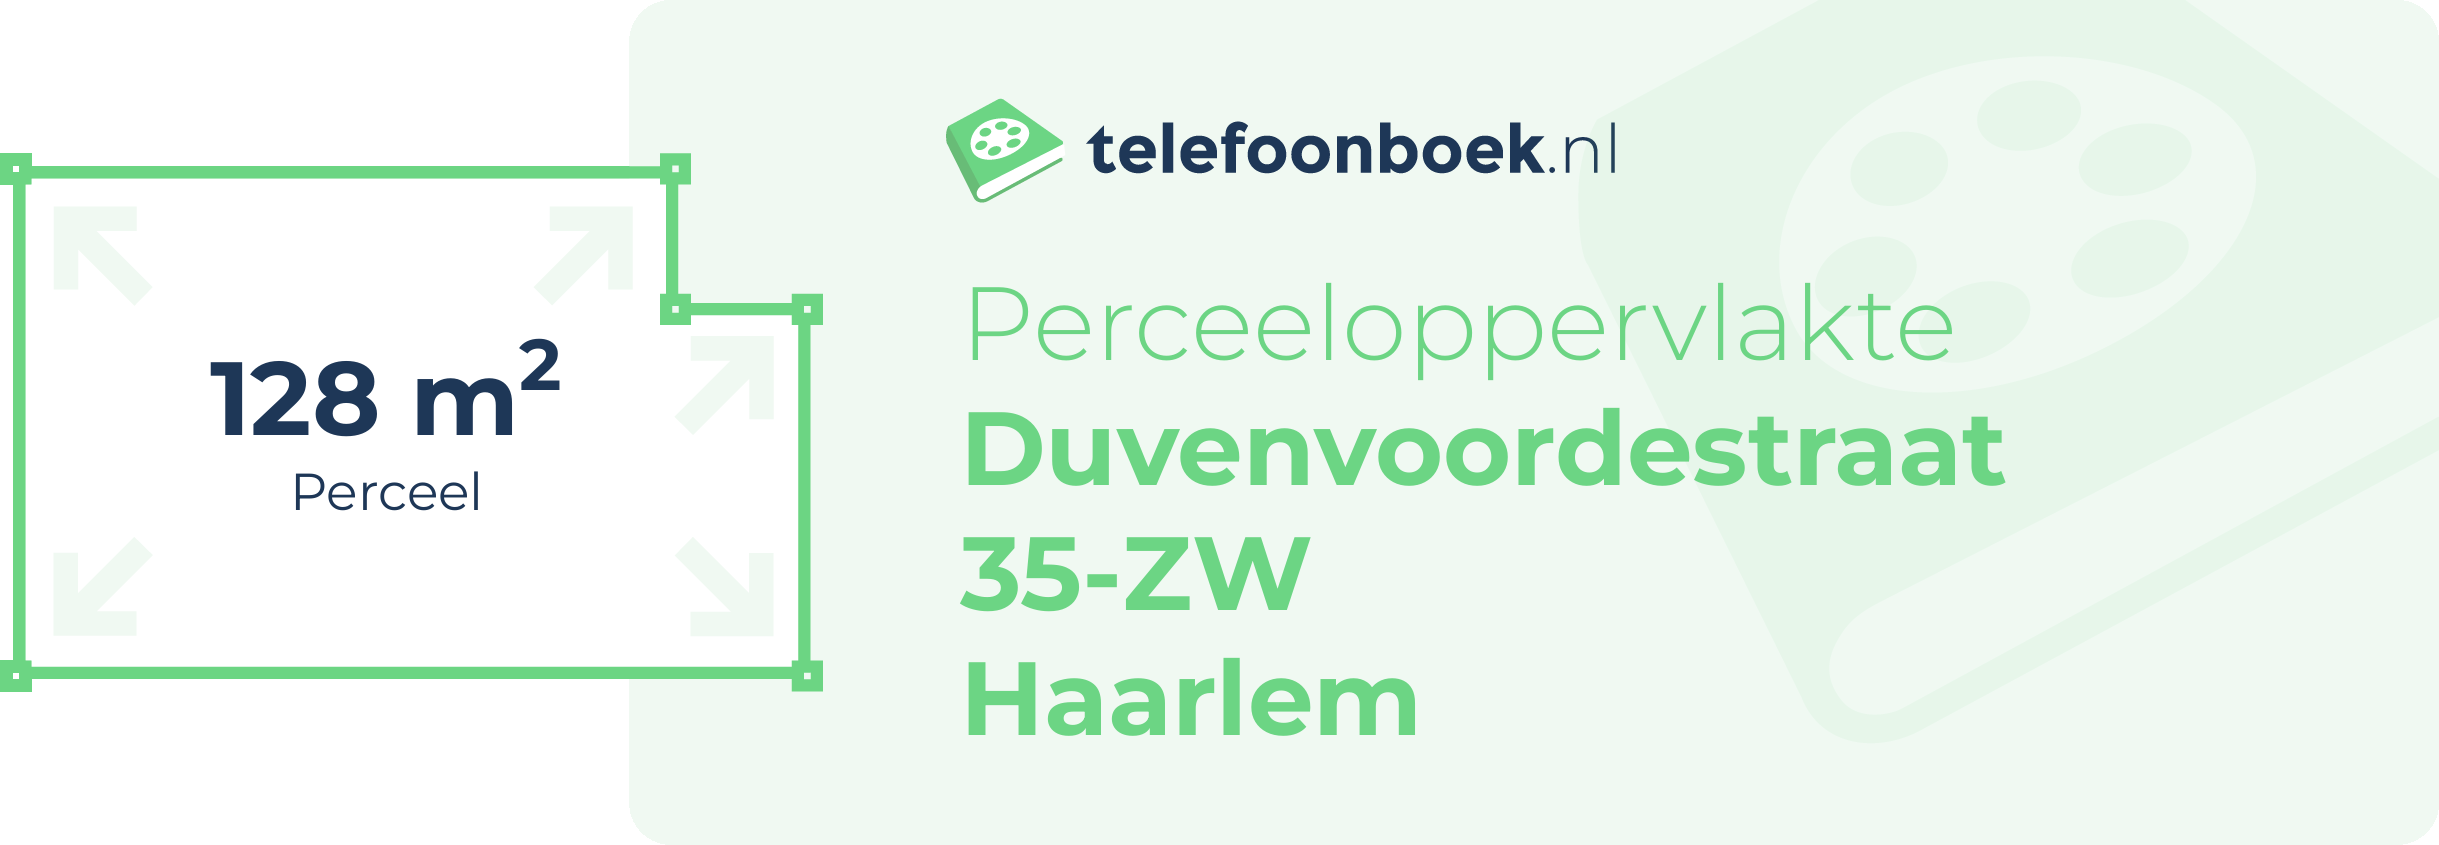 Perceeloppervlakte Duvenvoordestraat 35-ZW Haarlem